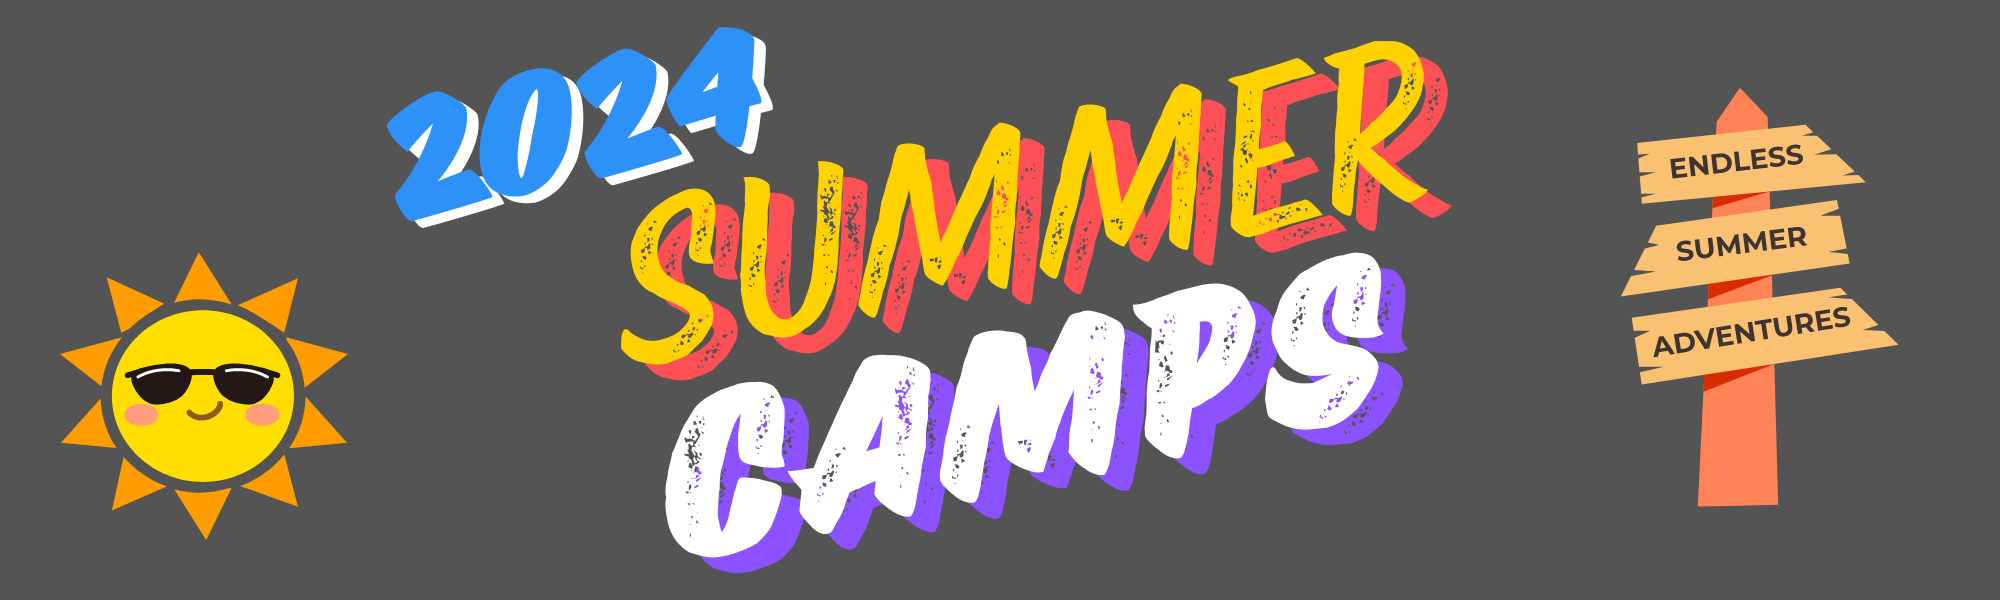 2024 Summer Camps